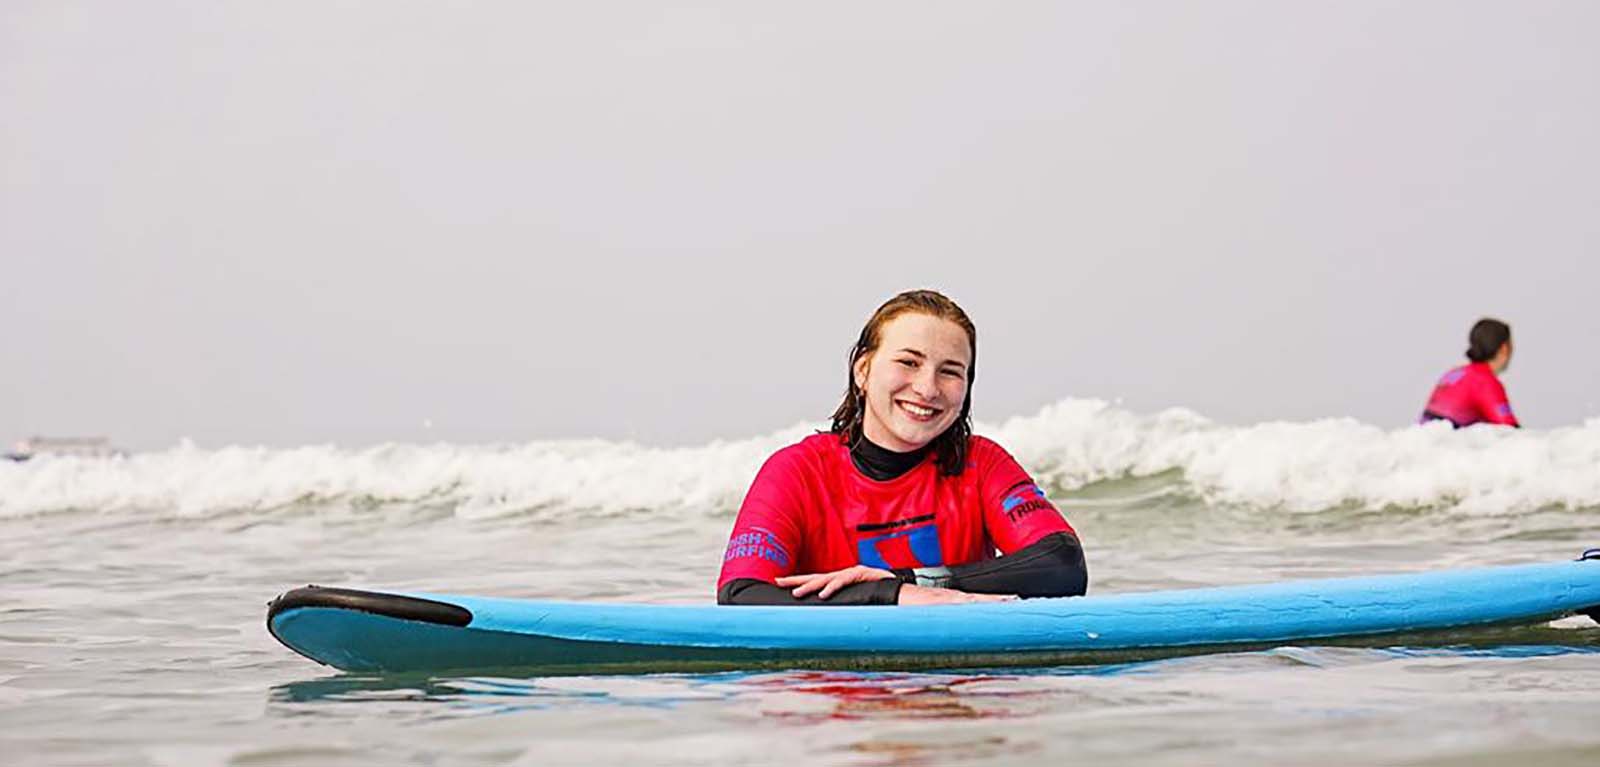 Tessa on a surf board